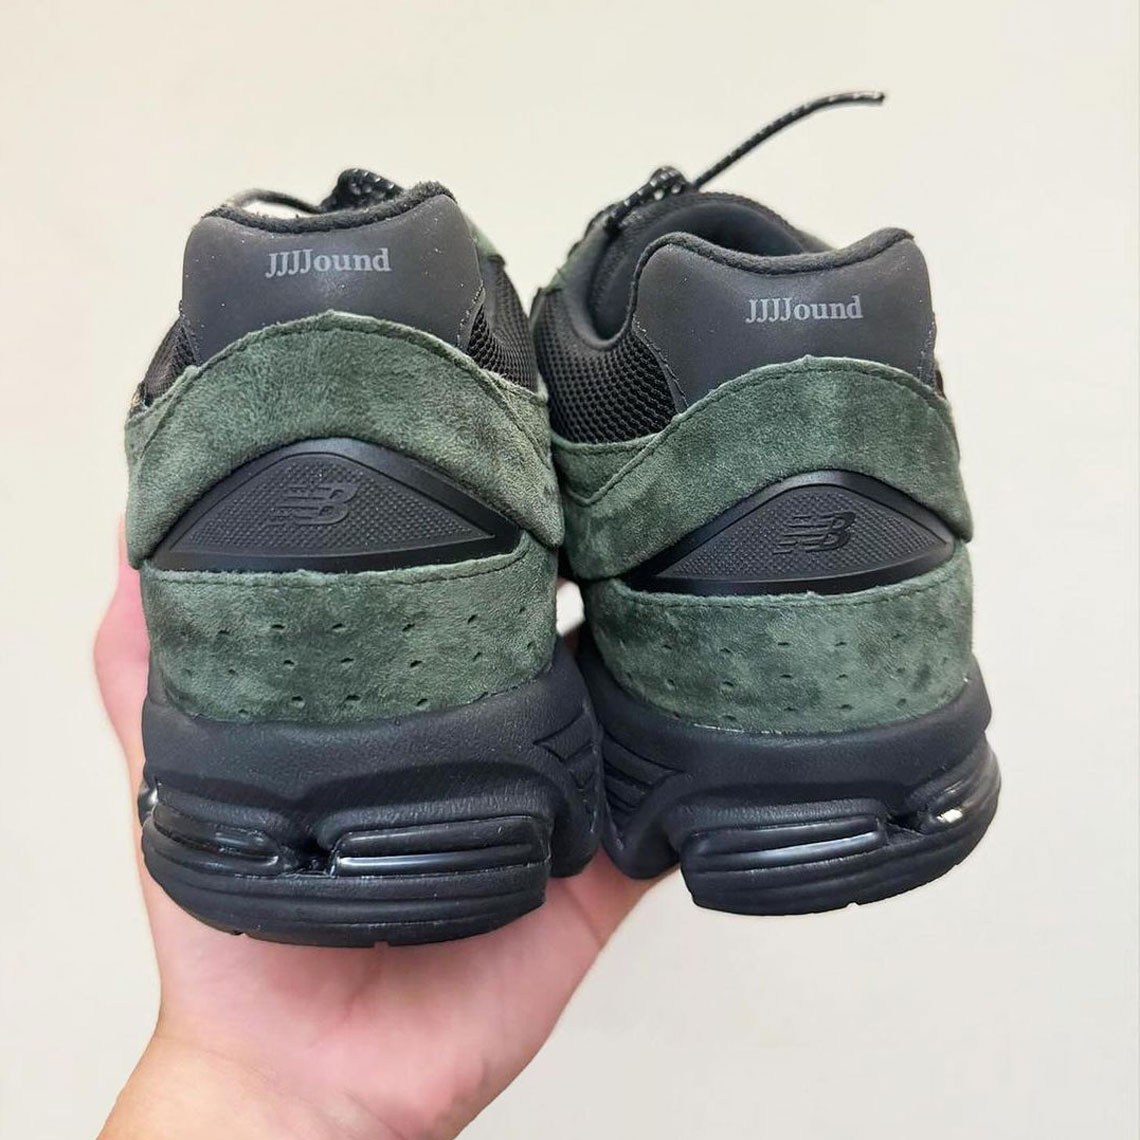 Jjjjound New Balance 373 KHAKI Marathon Running Shoes Sneakers Cozy Wear-resistant ML373MM2 Goretex Green Release Date 2